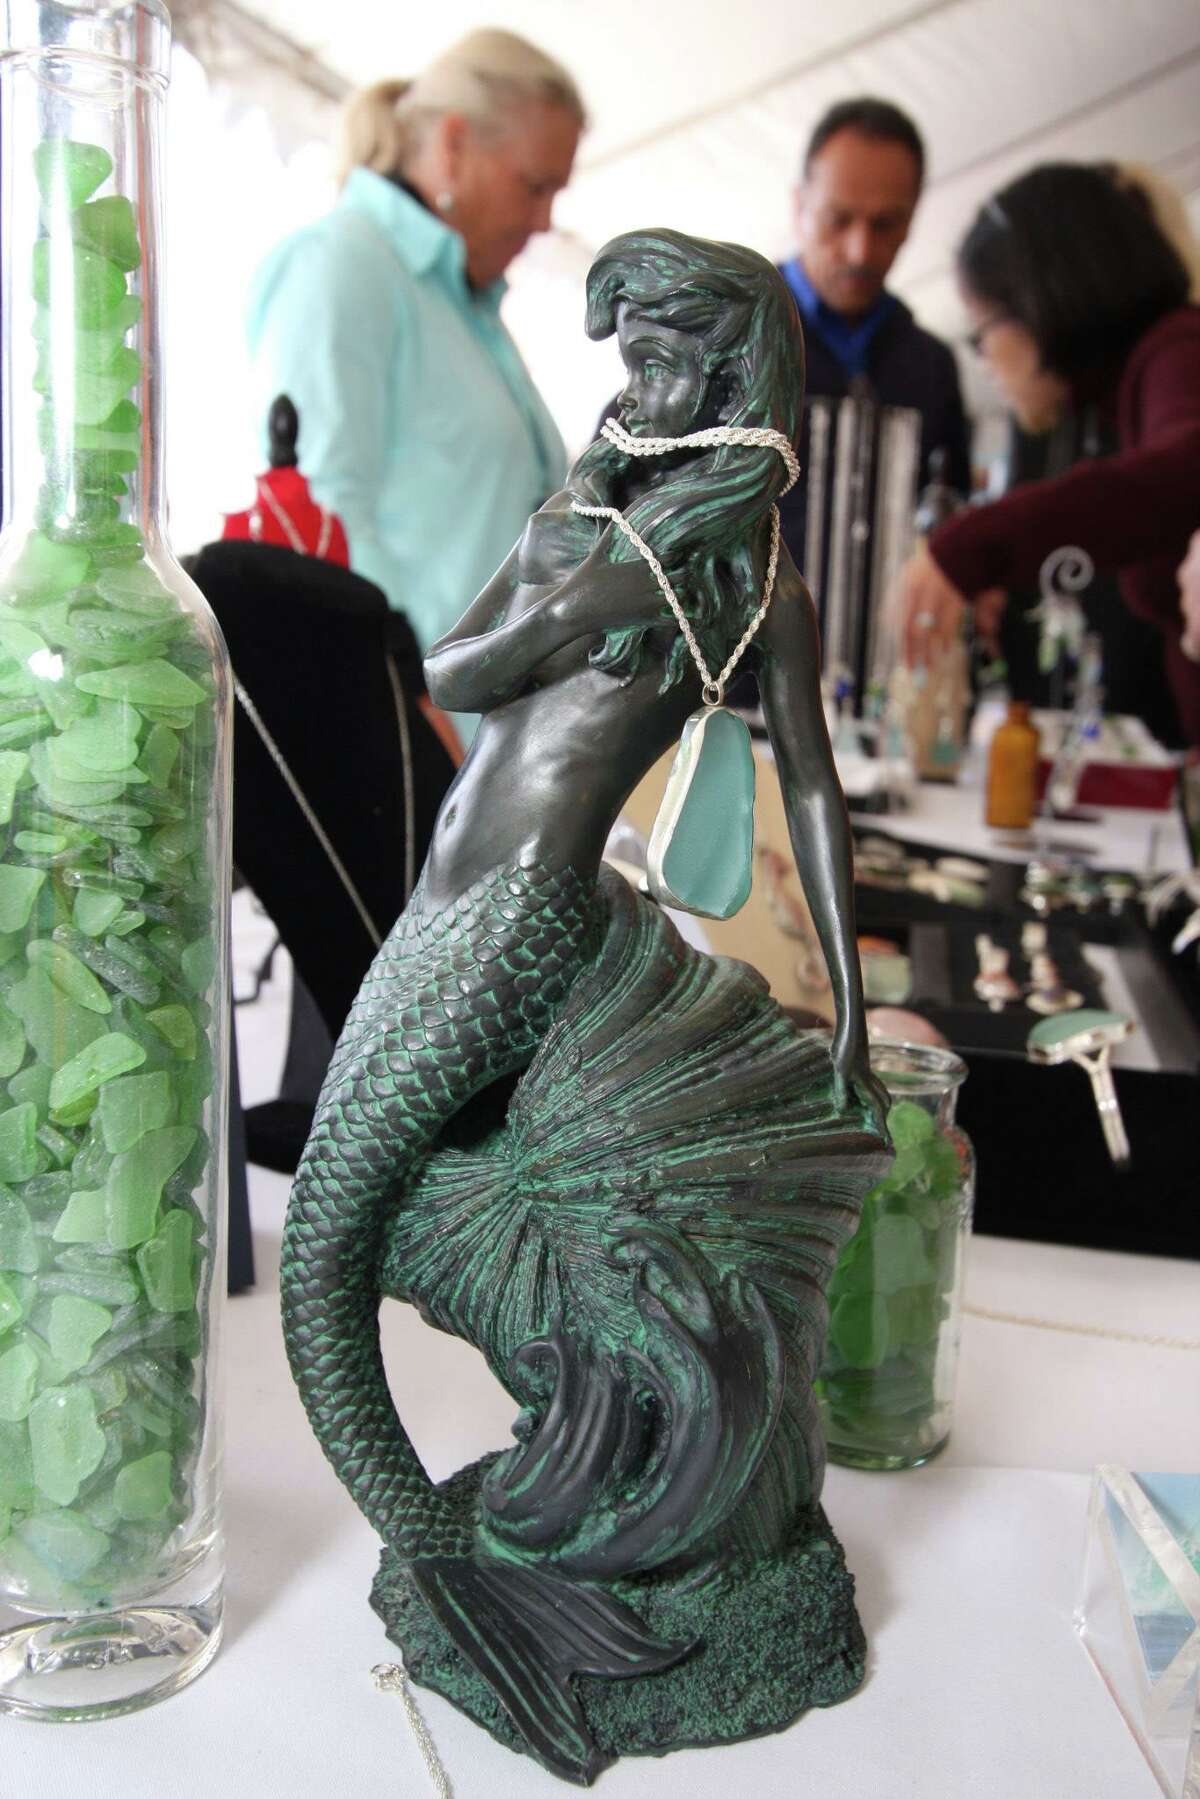 Cayucos Sea Glass Festival draws crowds to California beach town